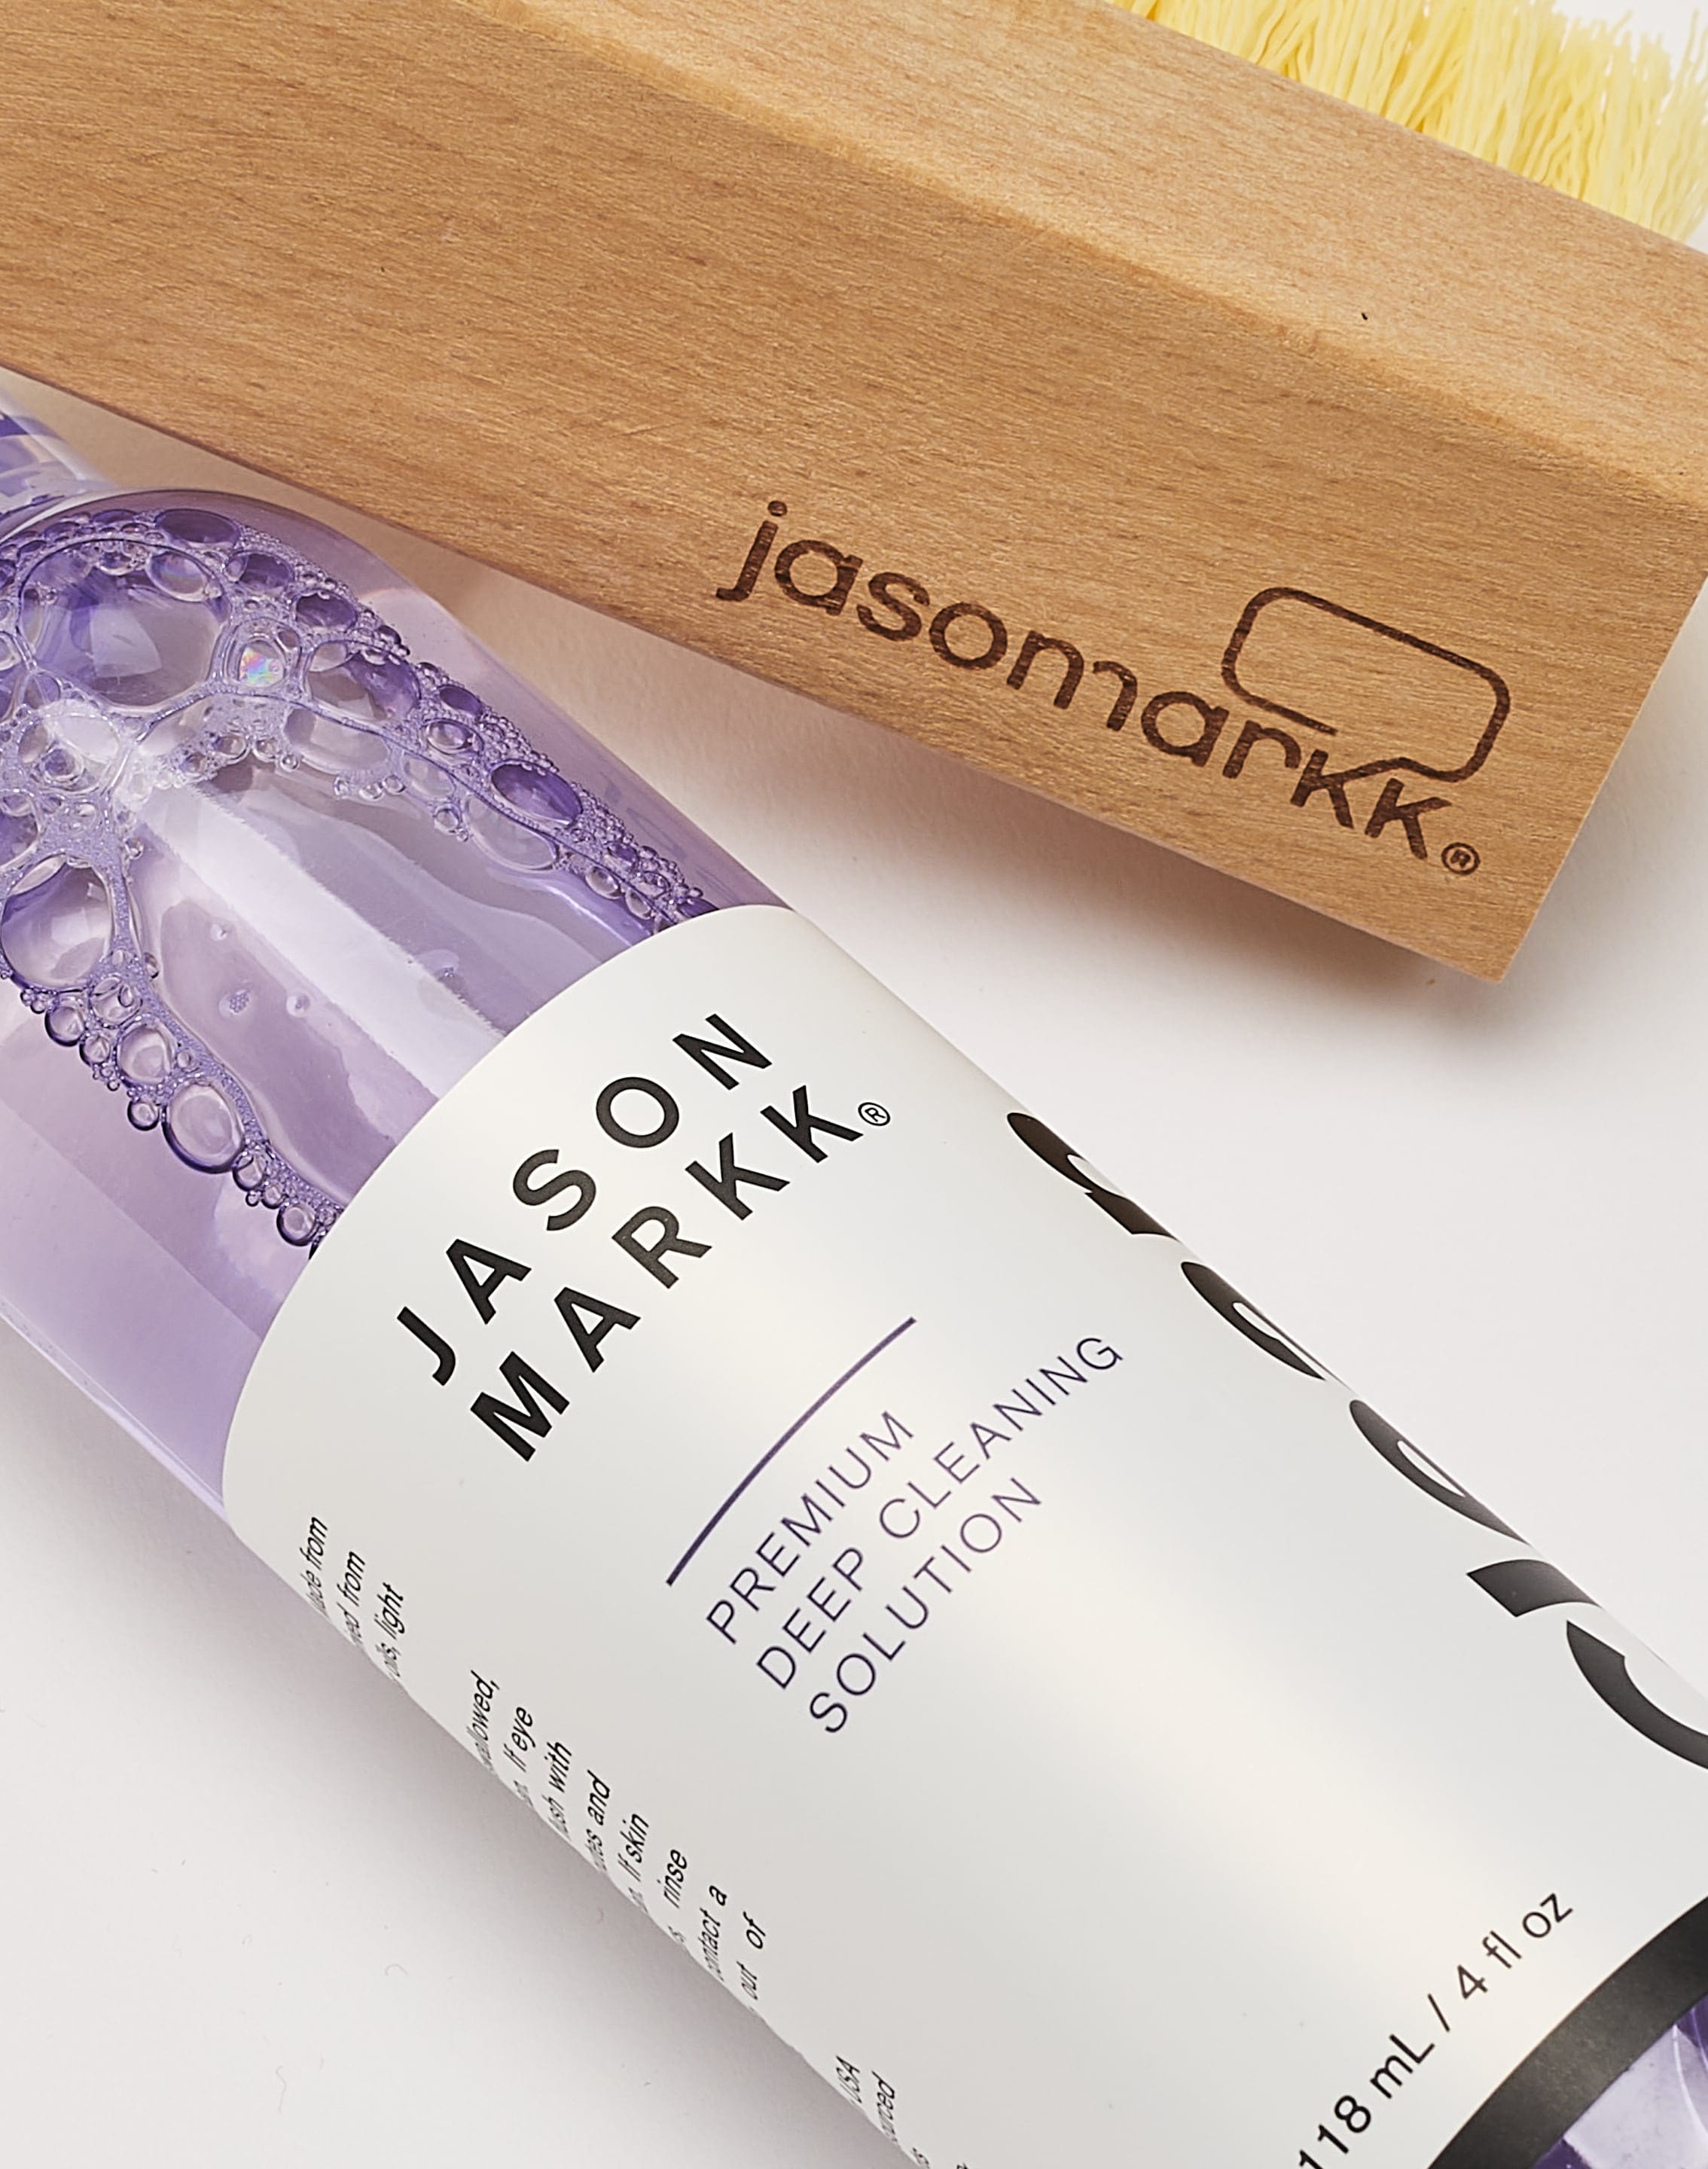 Jason Markk Essential Shoe Care Kit - 4 oz Premium Shoe Cleaner & Standard  Brush